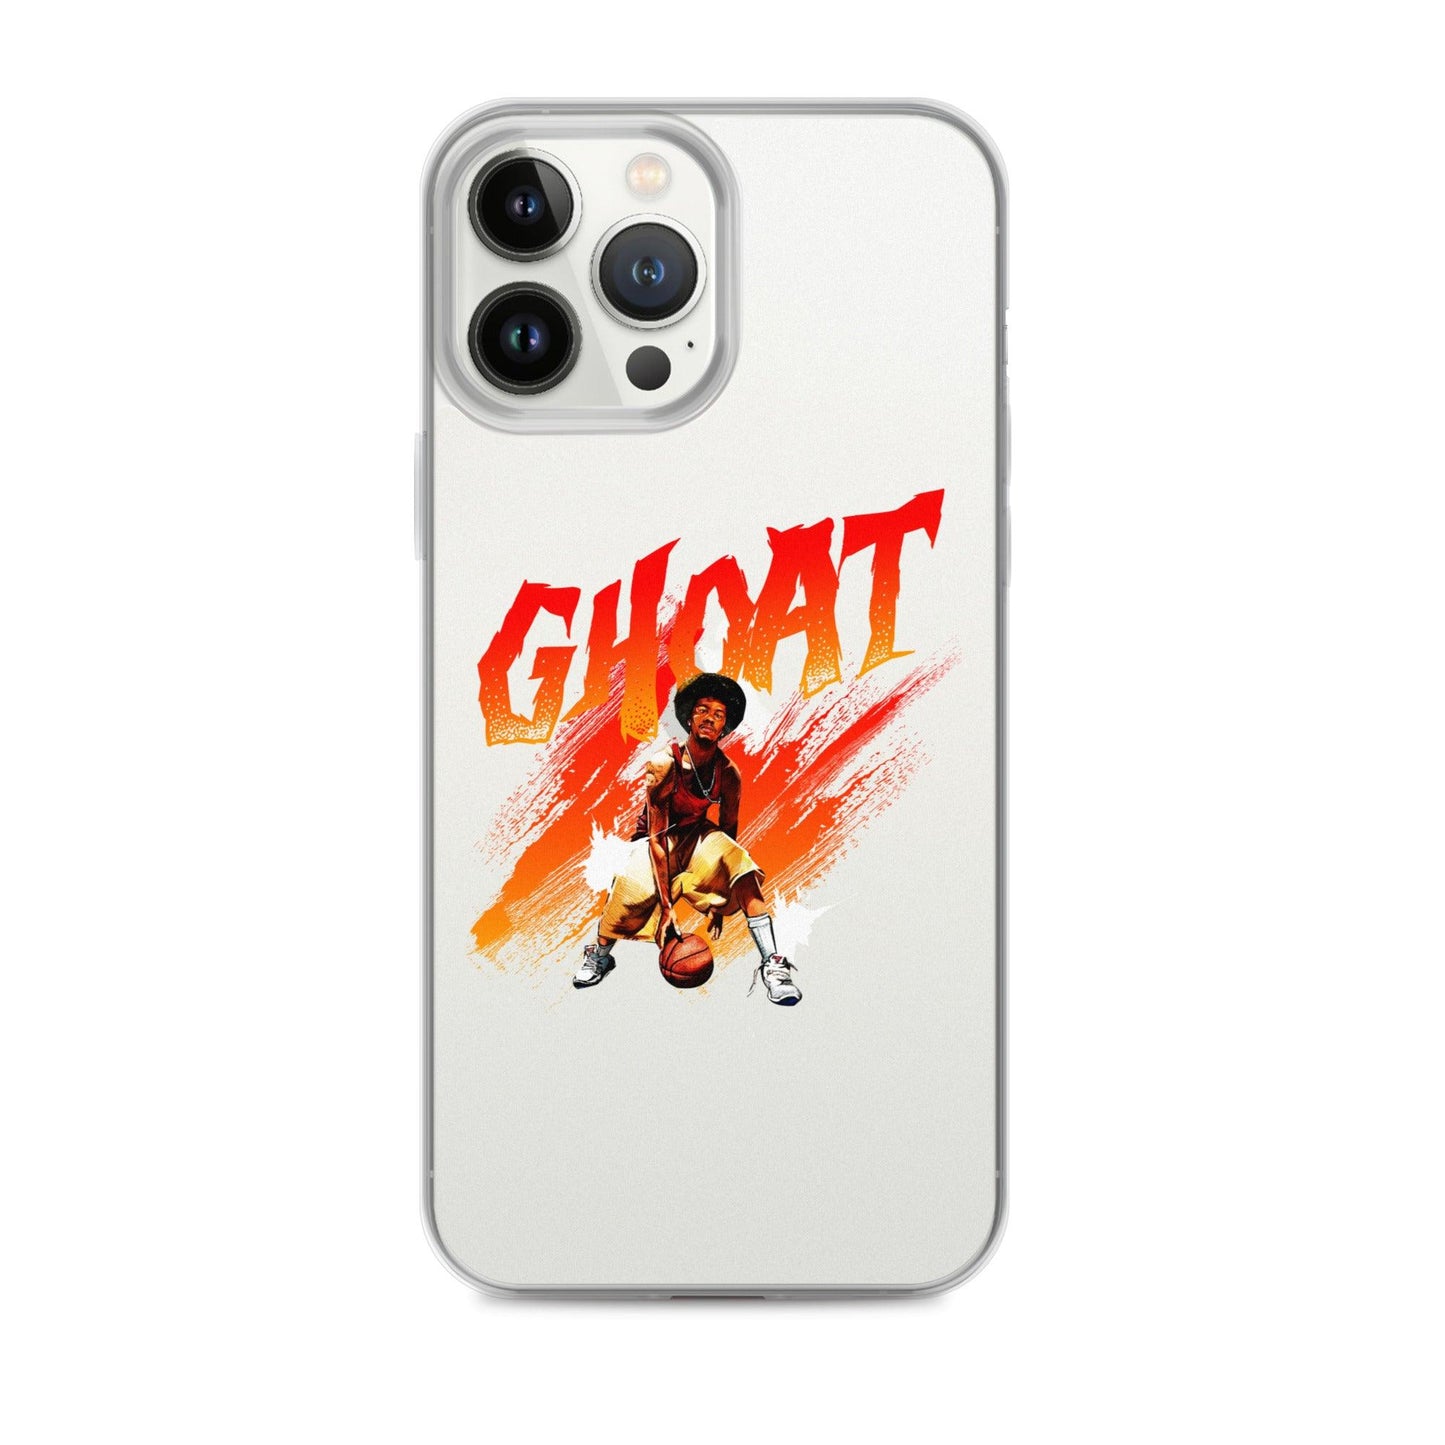 Hot Sauce "Ghoat" iPhone Case - Fan Arch